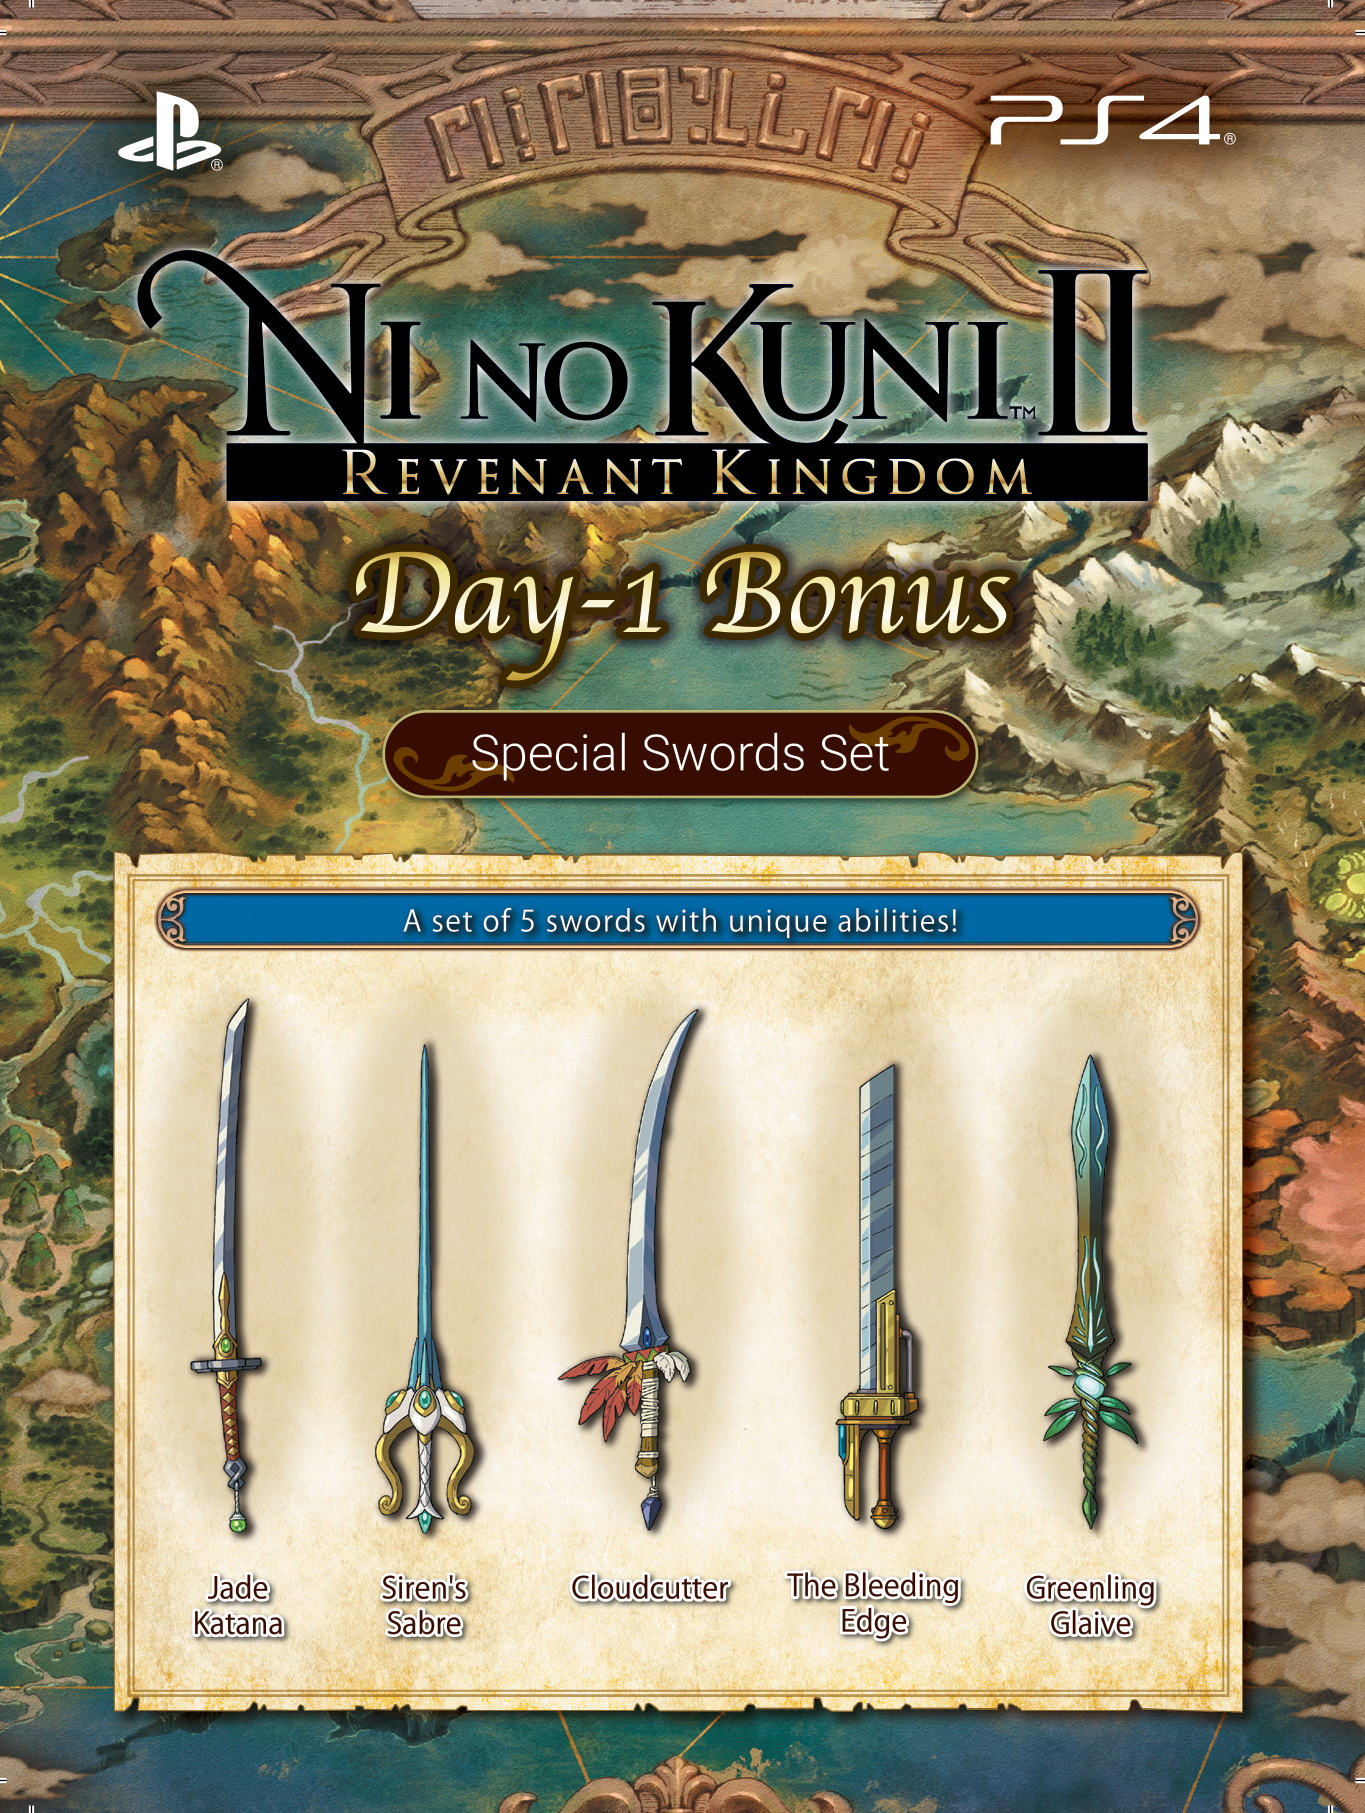 play-asia.com, NI NO KUNI II: REVENANT KINGDOM, NI NO KUNI II: REVENANT KINGDOM DLC, NI NO KUNI II: REVENANT KINGDOM steam, NI NO KUNI II: REVENANT KINGDOM release date, NI NO KUNI II: REVENANT KINGDOM price, NI NO KUNI II: REVENANT KINGDOM gameplay, NI NO KUNI II: REVENANT KINGDOM features